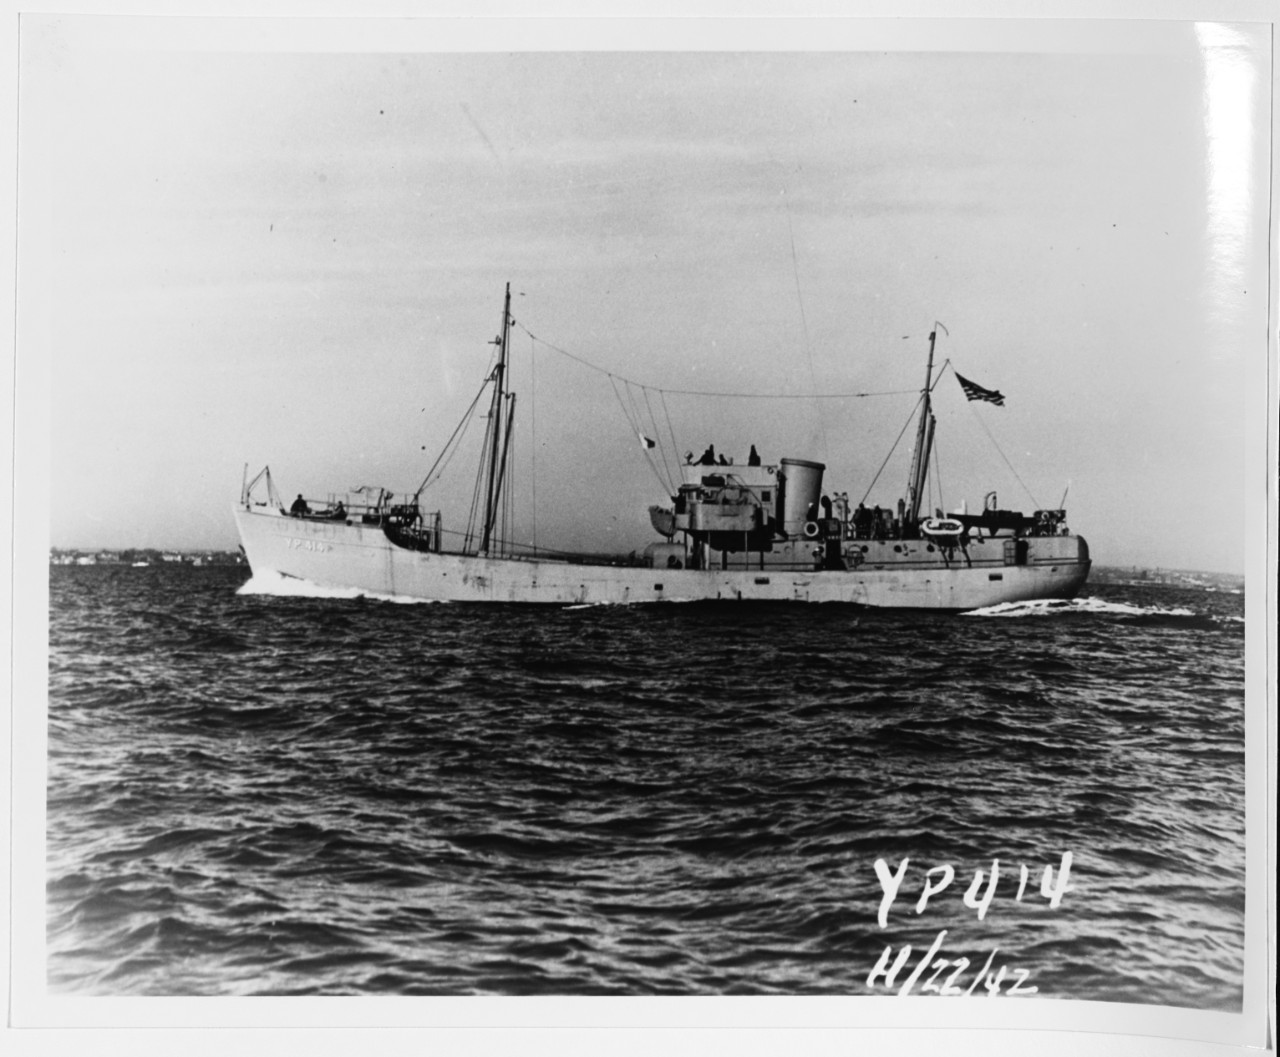 USS YP-414